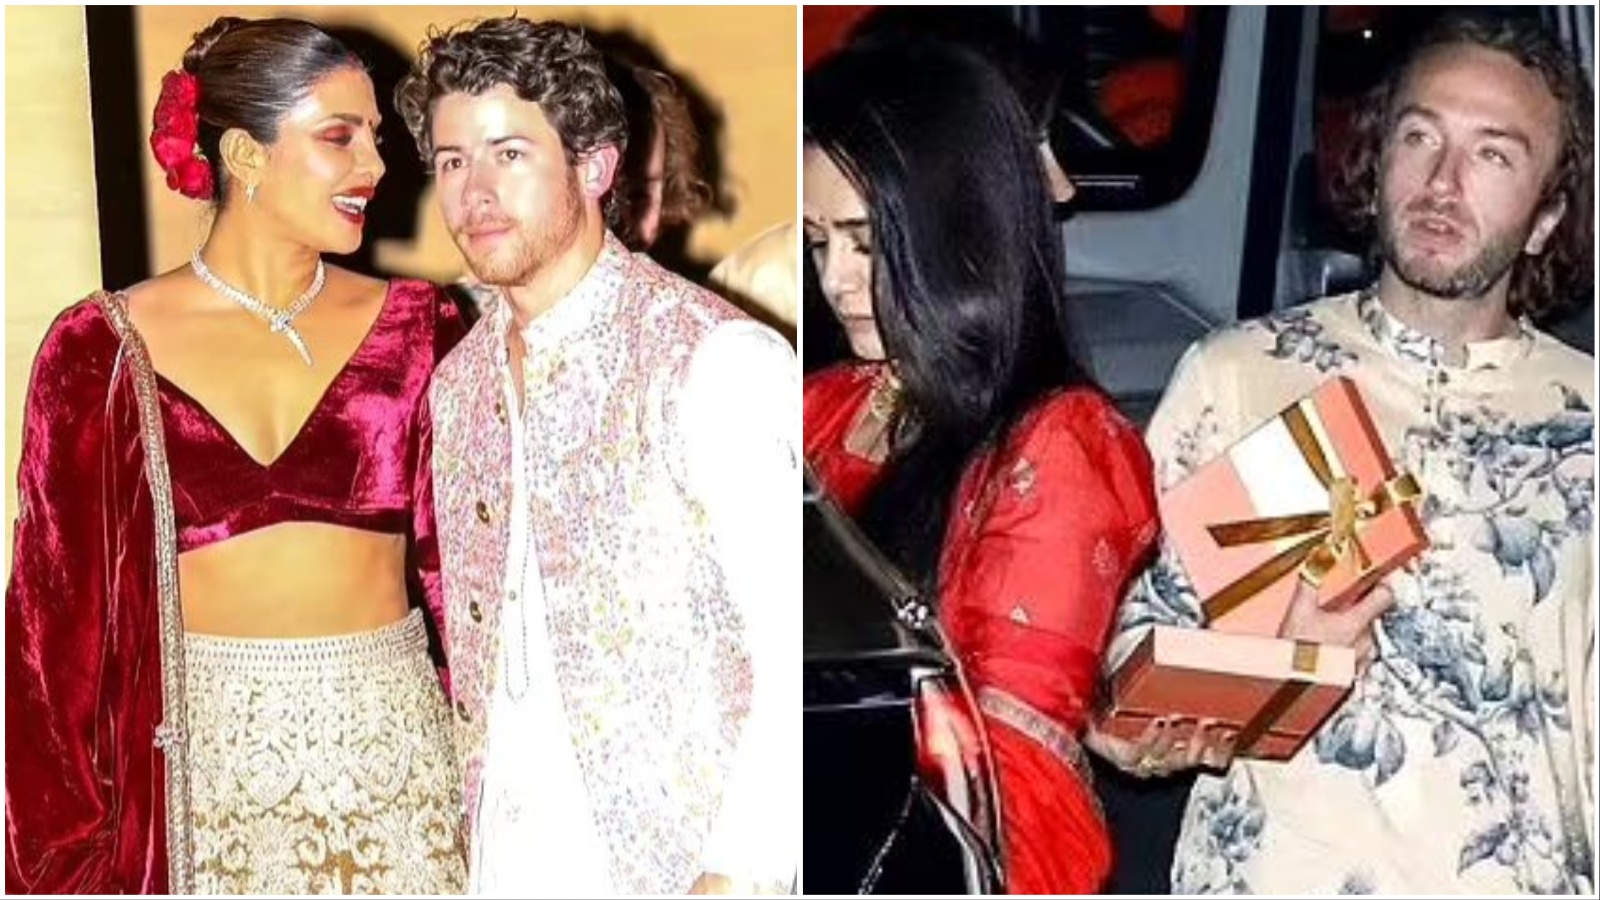 Pooja Chopra Xxnx - Priyanka Chopra-Nick Jonas host Diwali party in LA, Preity Zinta in  attendance. See photos | Bollywood News - The Indian Express